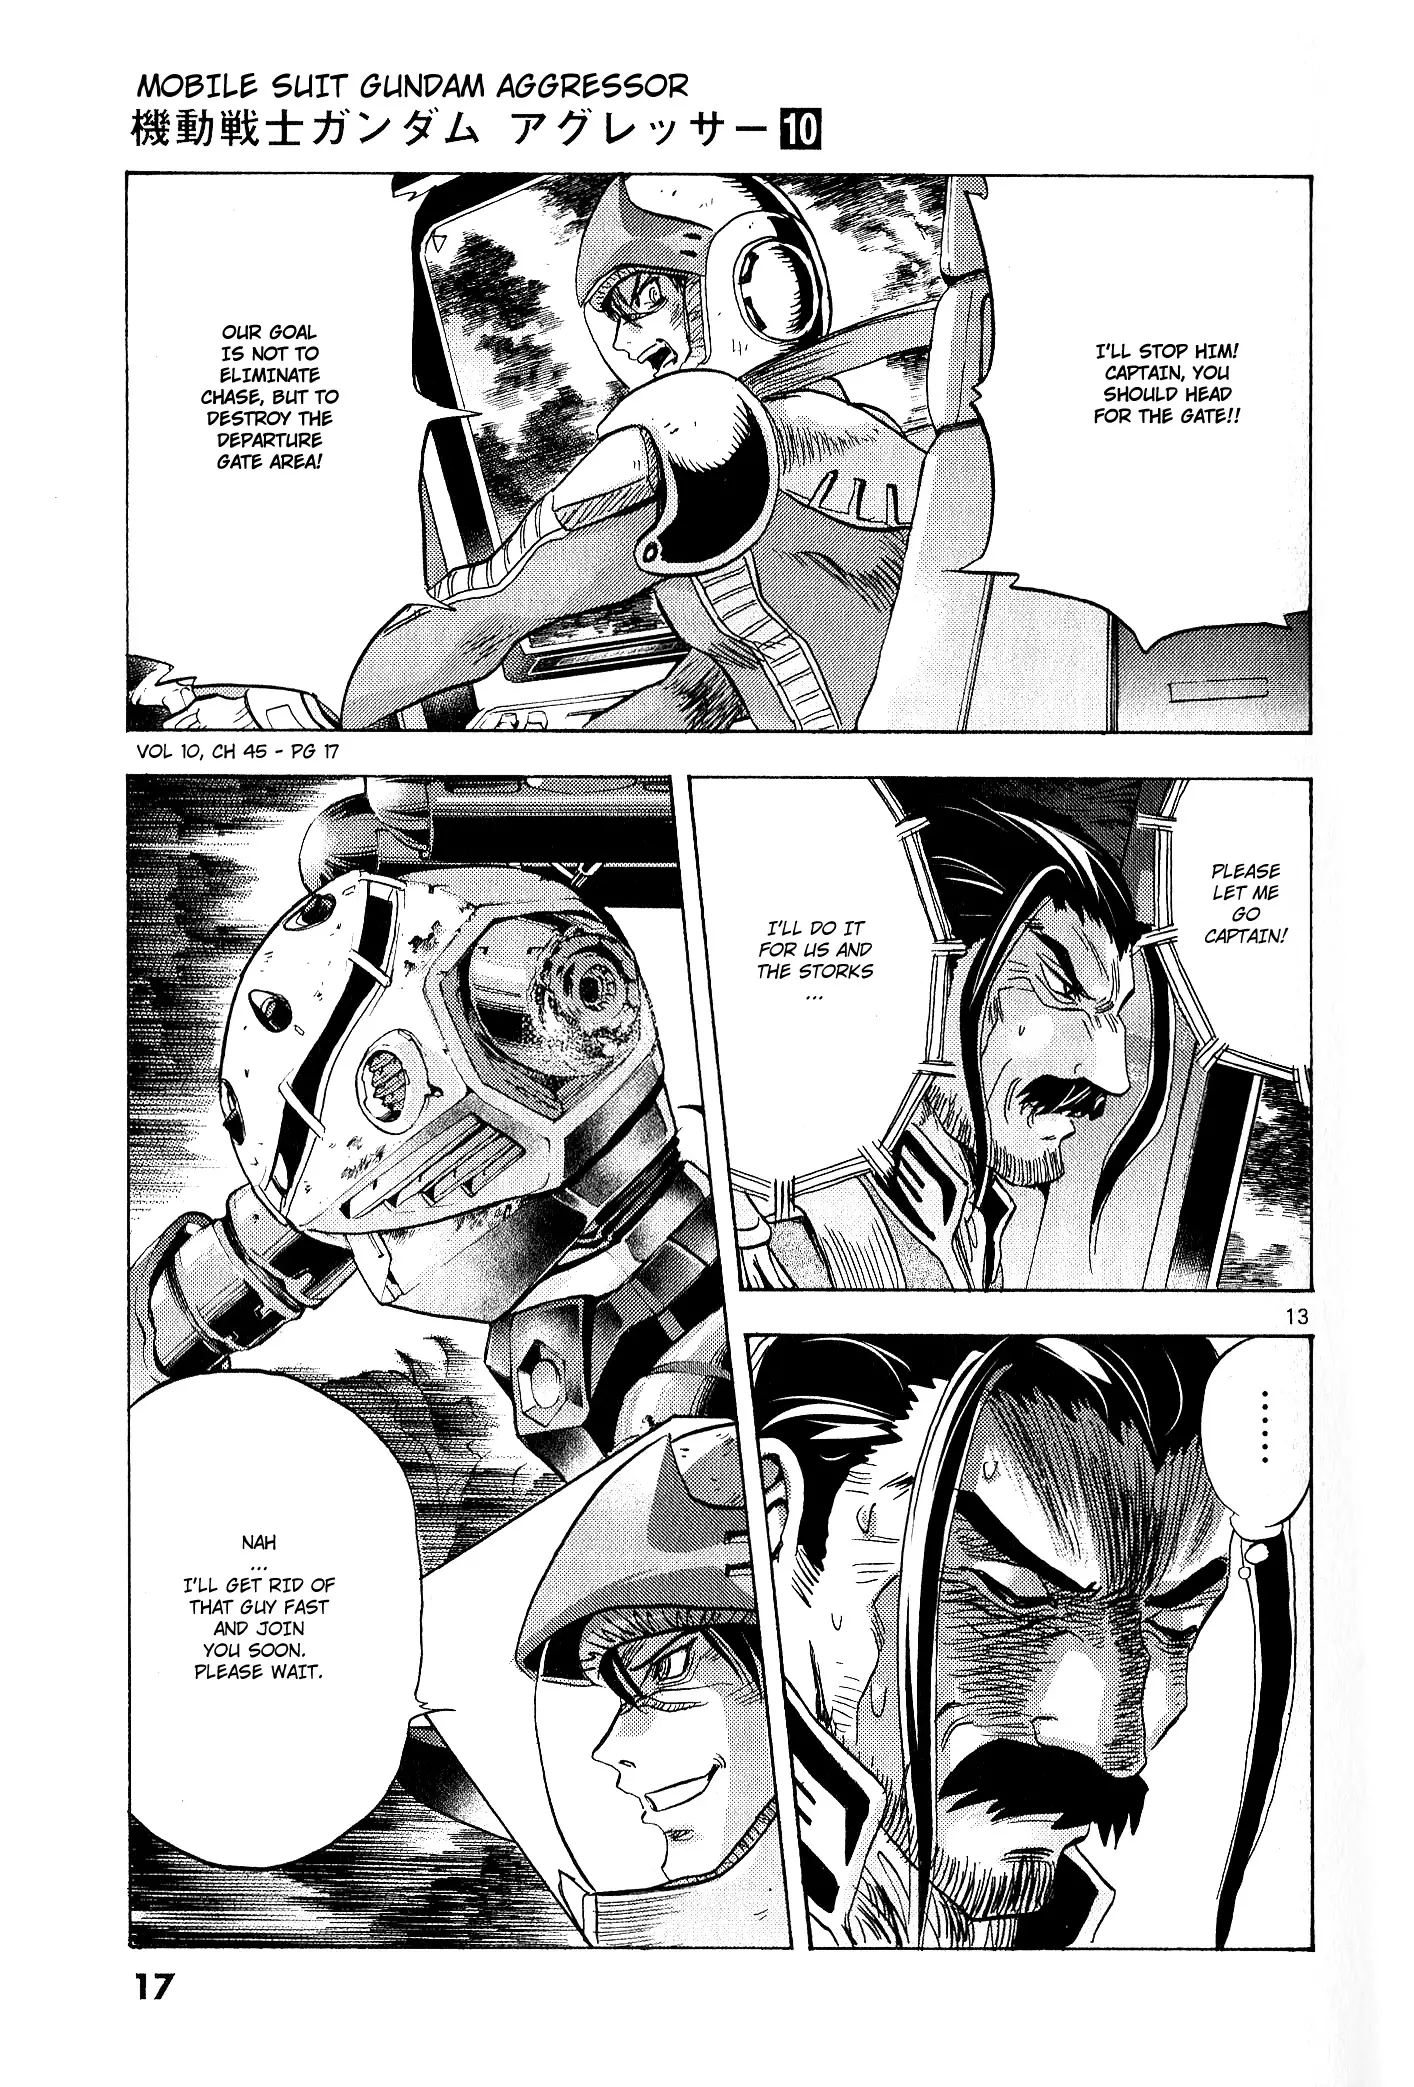 Mobile Suit Gundam Aggressor - 45 page 13-198dde80